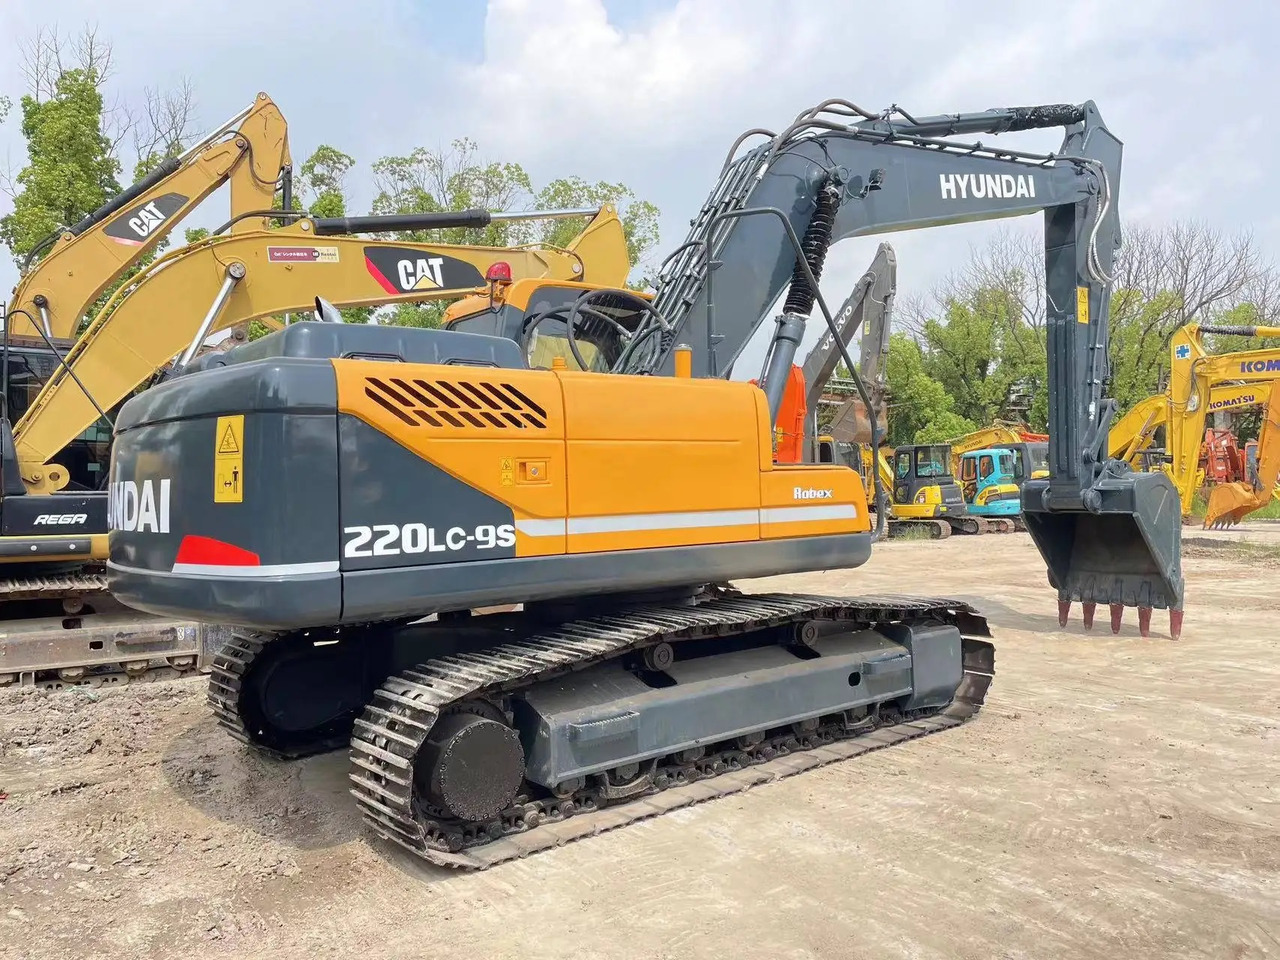 Beltegraver HYUNDAI R220 -9S track excavator 22 tons Korean hydraulic digger: bilde 3